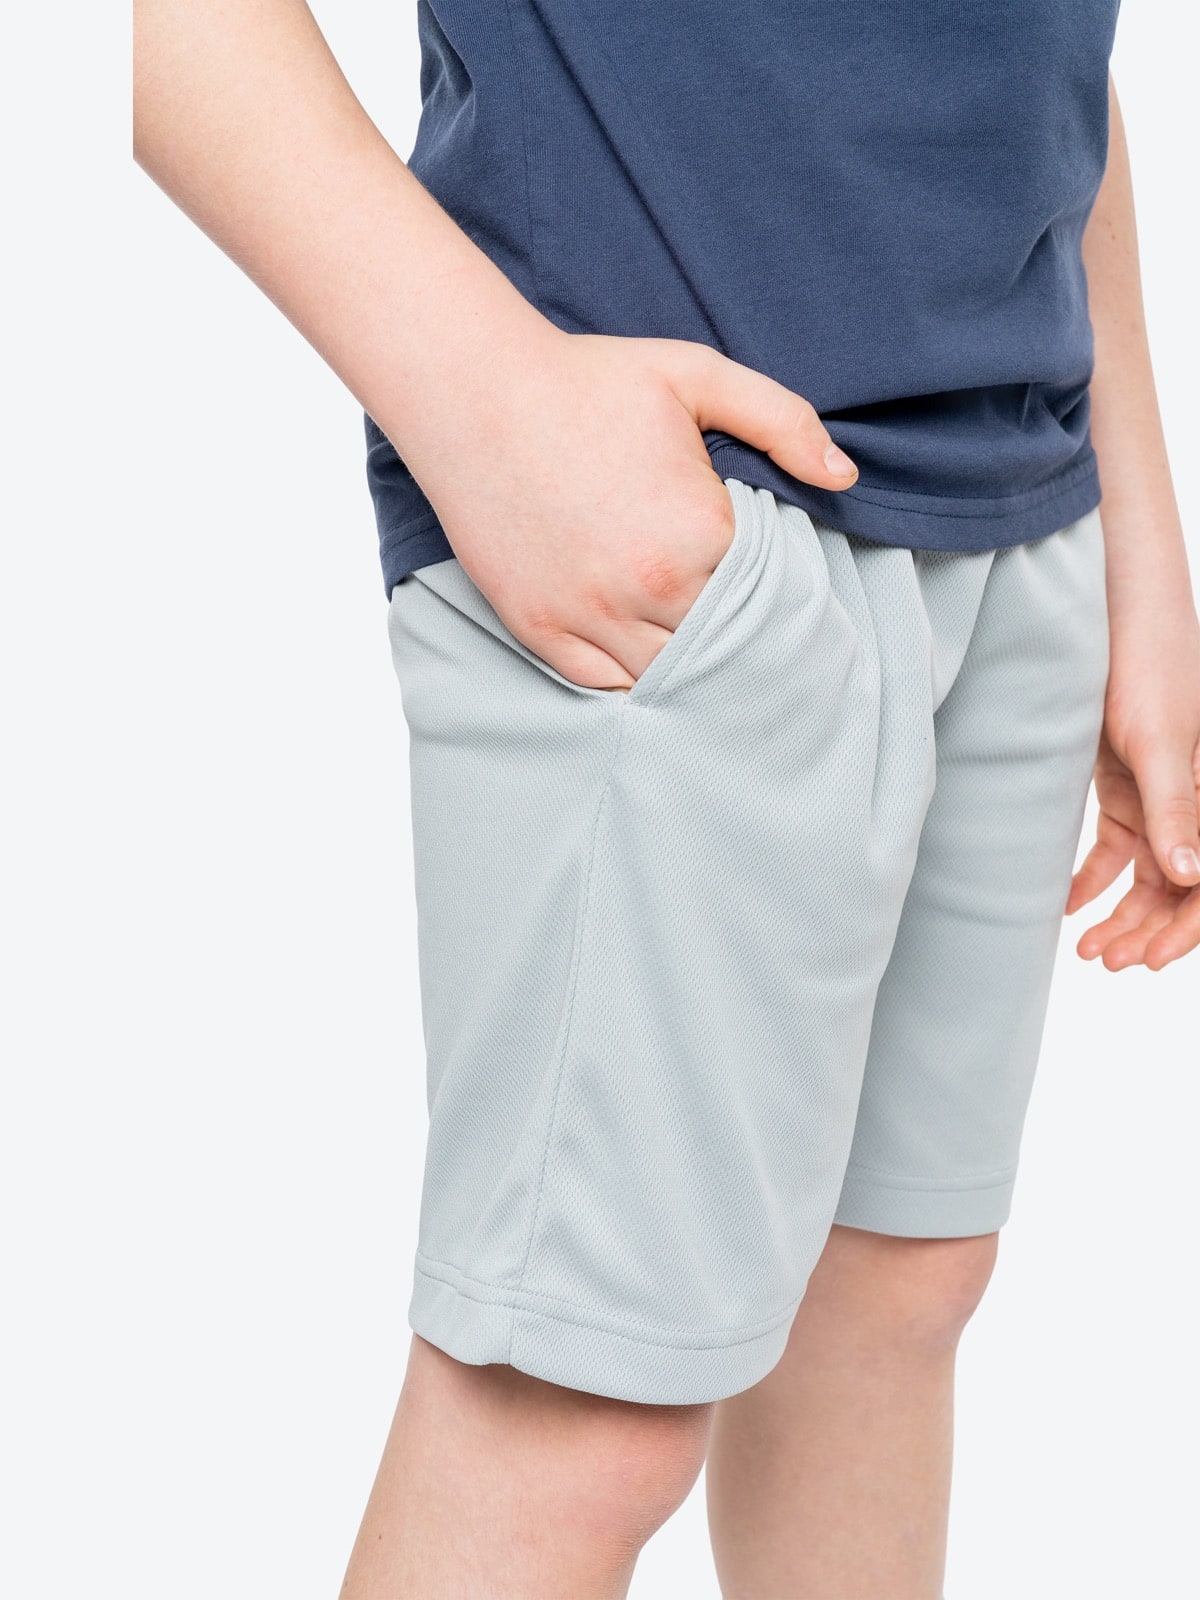 Insect Shield Boys' Performance Ripstop Pants | Size 10 | Dark Khaki | Polyester/Cotton